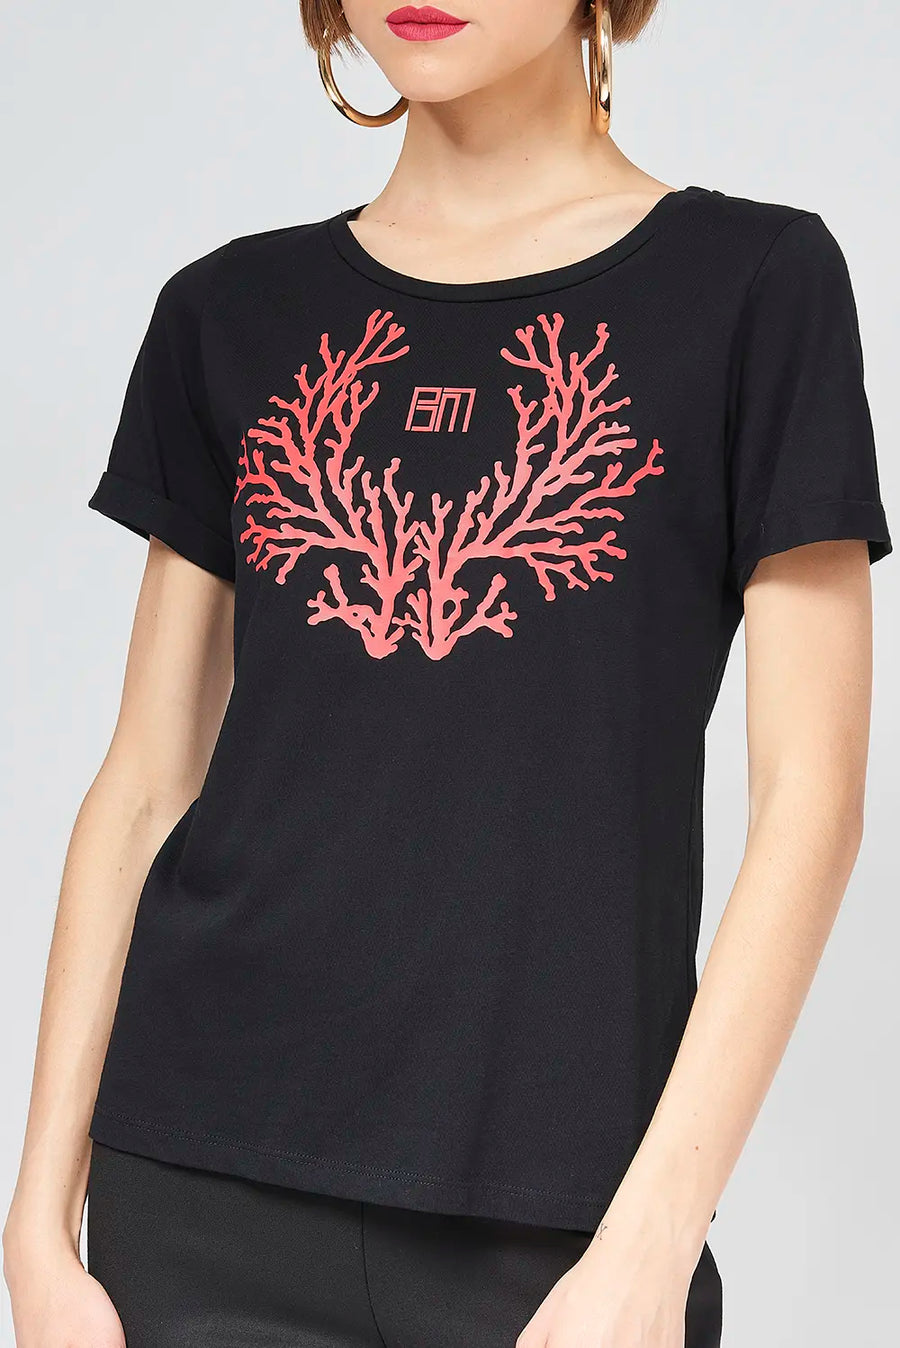 T-shirt nera stampa coralli